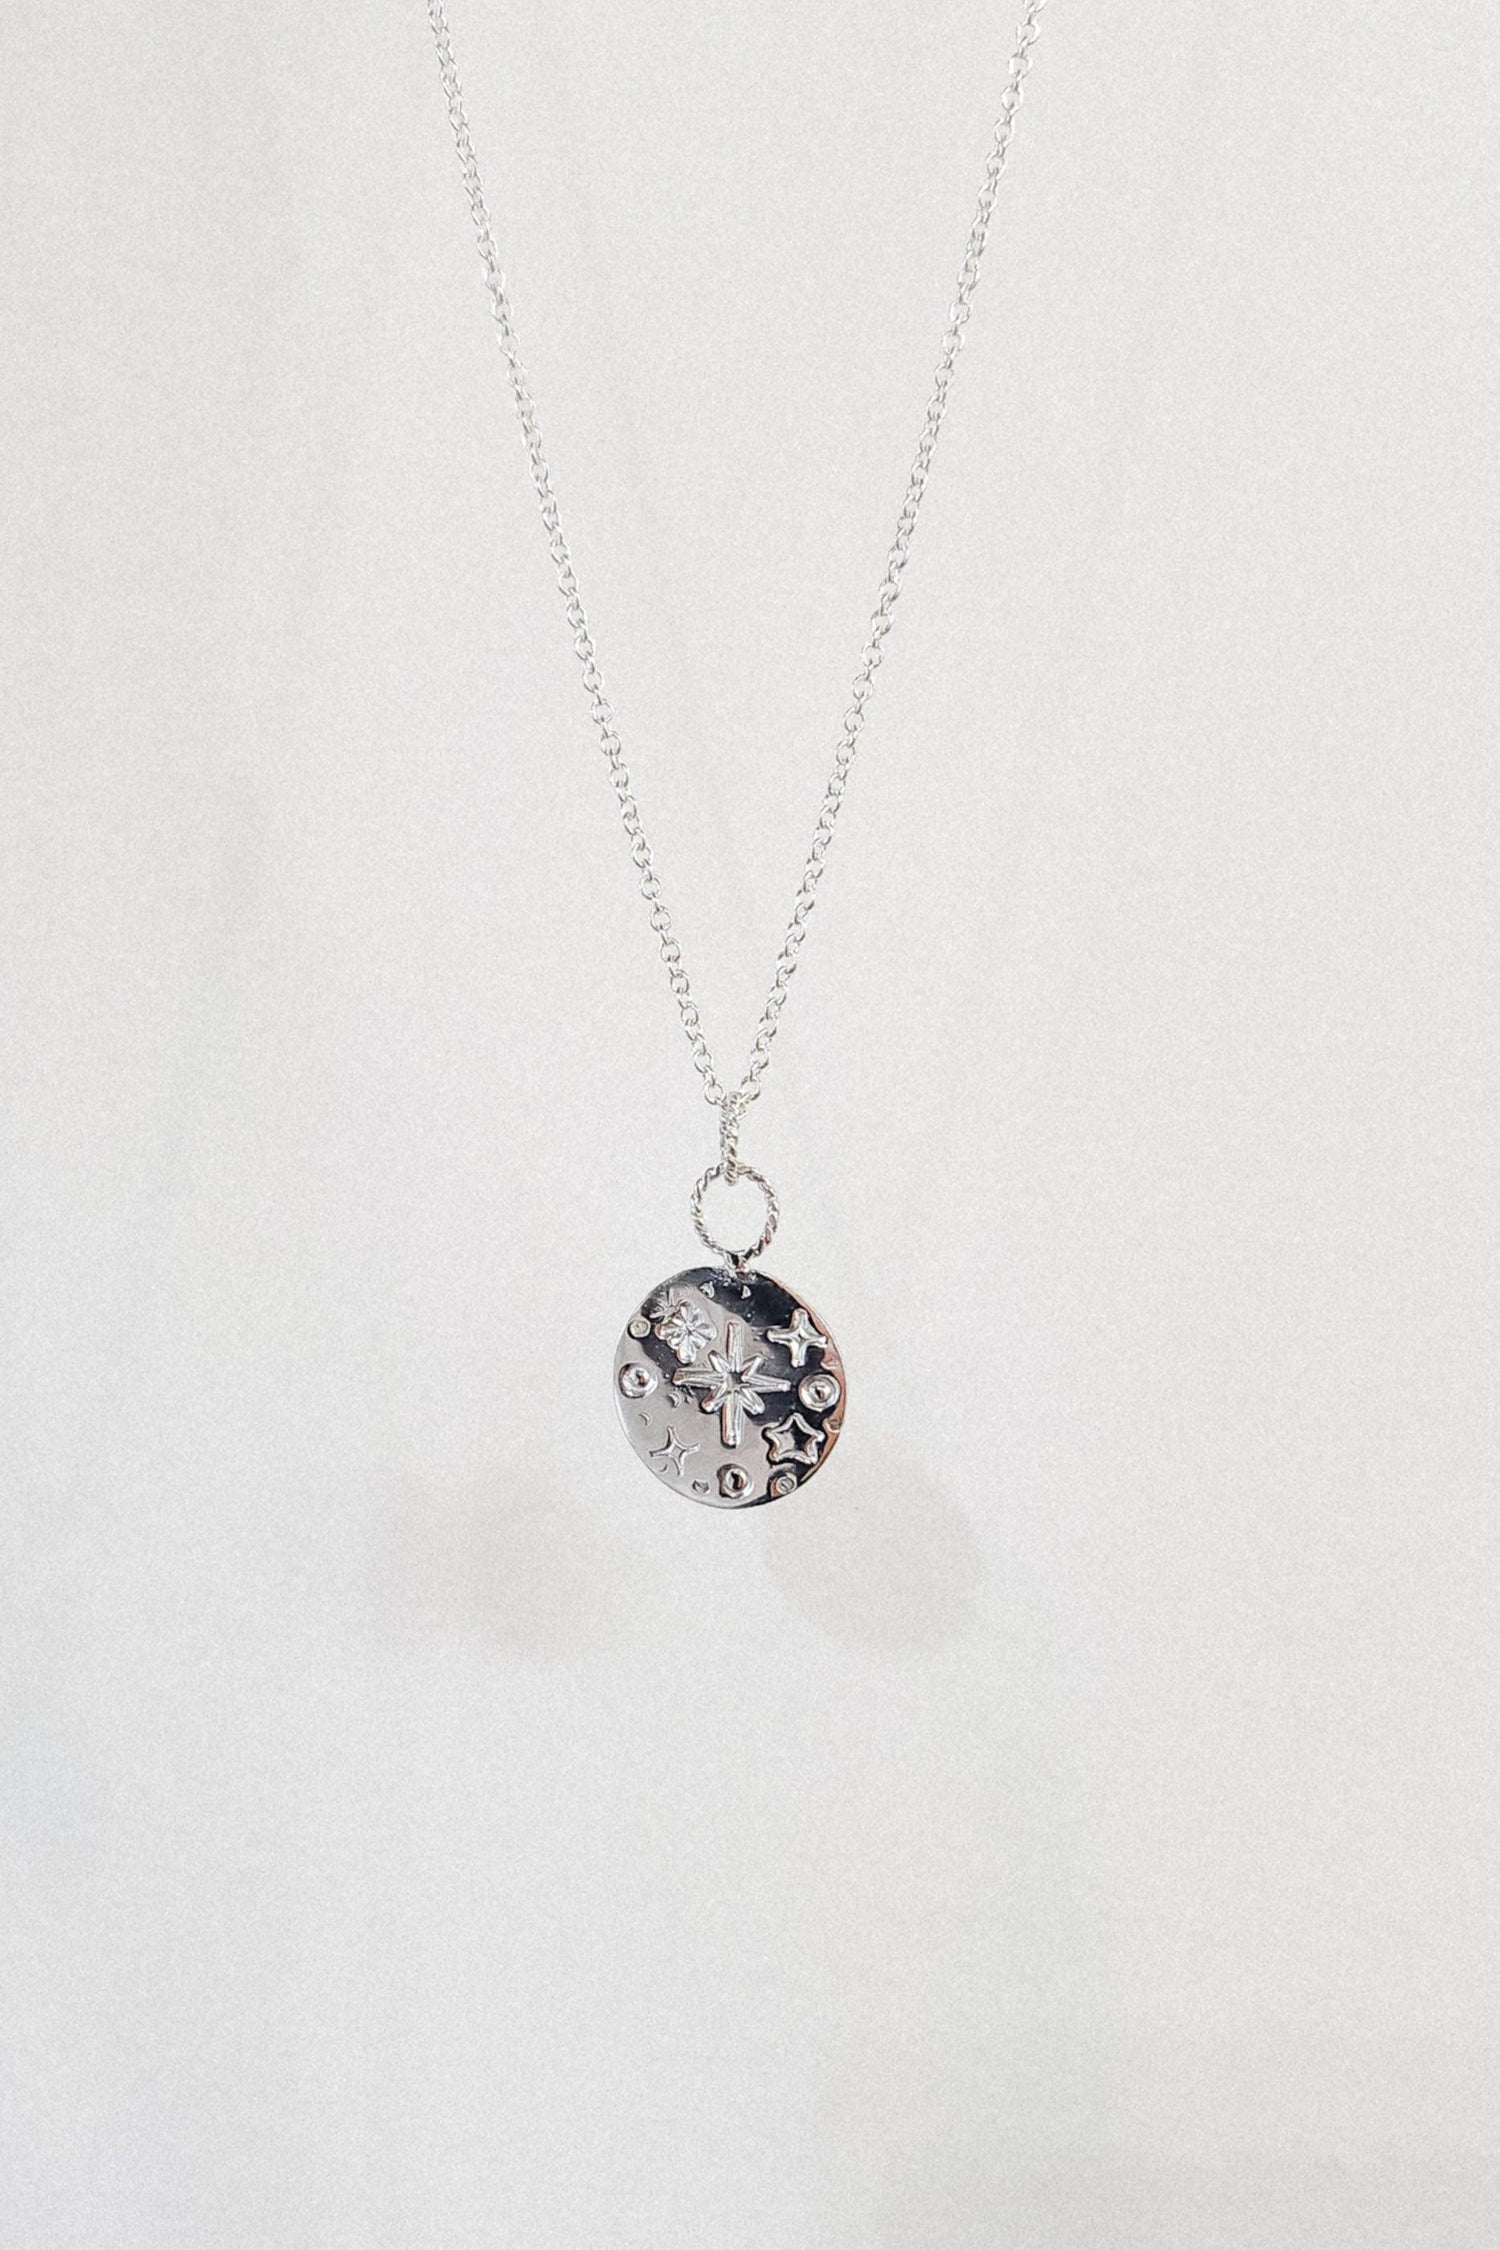 Hera Necklace Silver : Astrology - Estilos by Ytalia